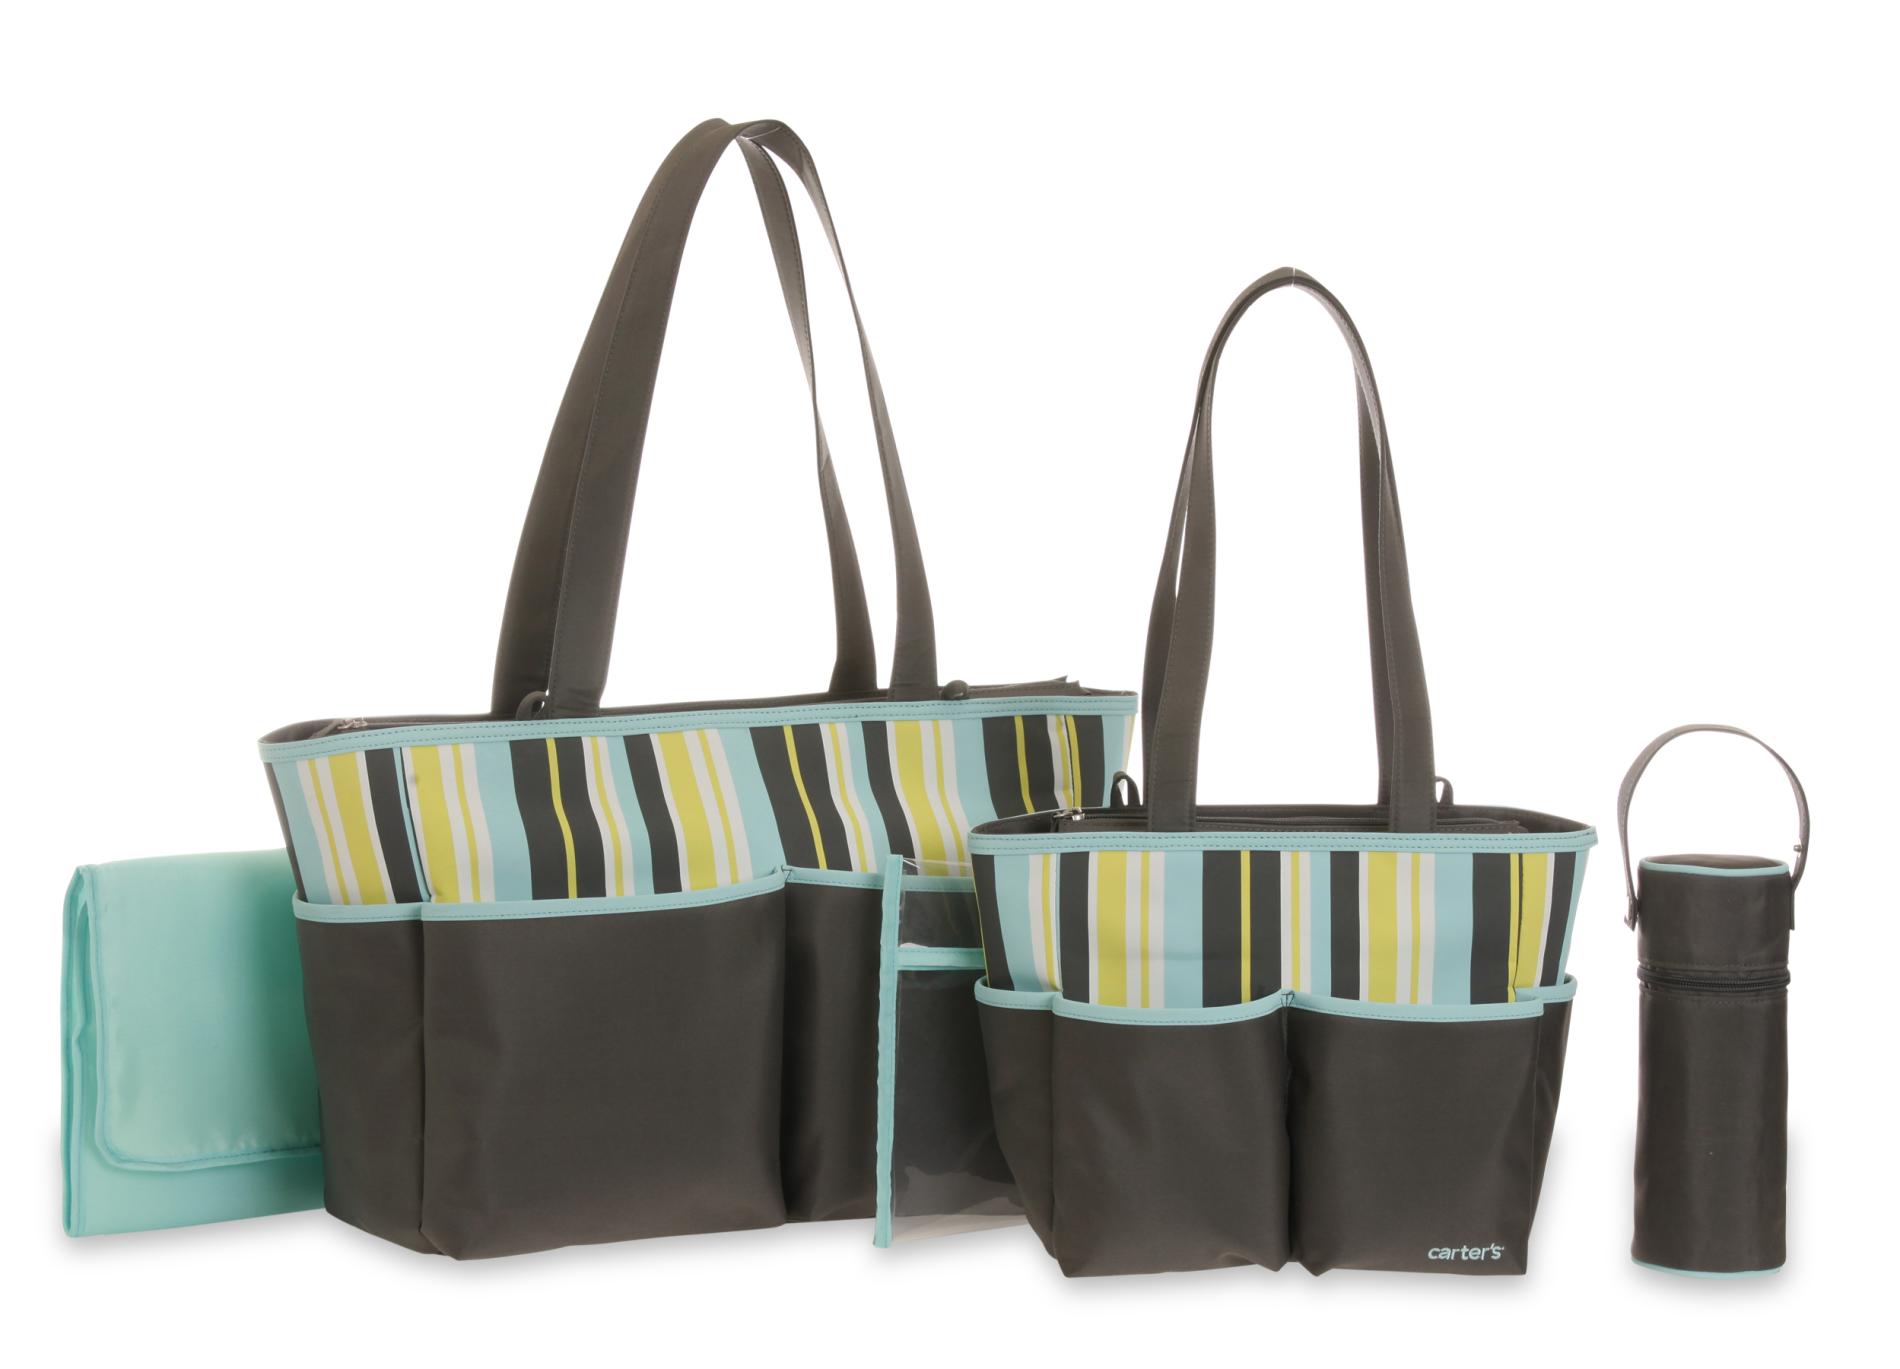 Carter's Women's 5-Piece Diaper Bag Set - Striped